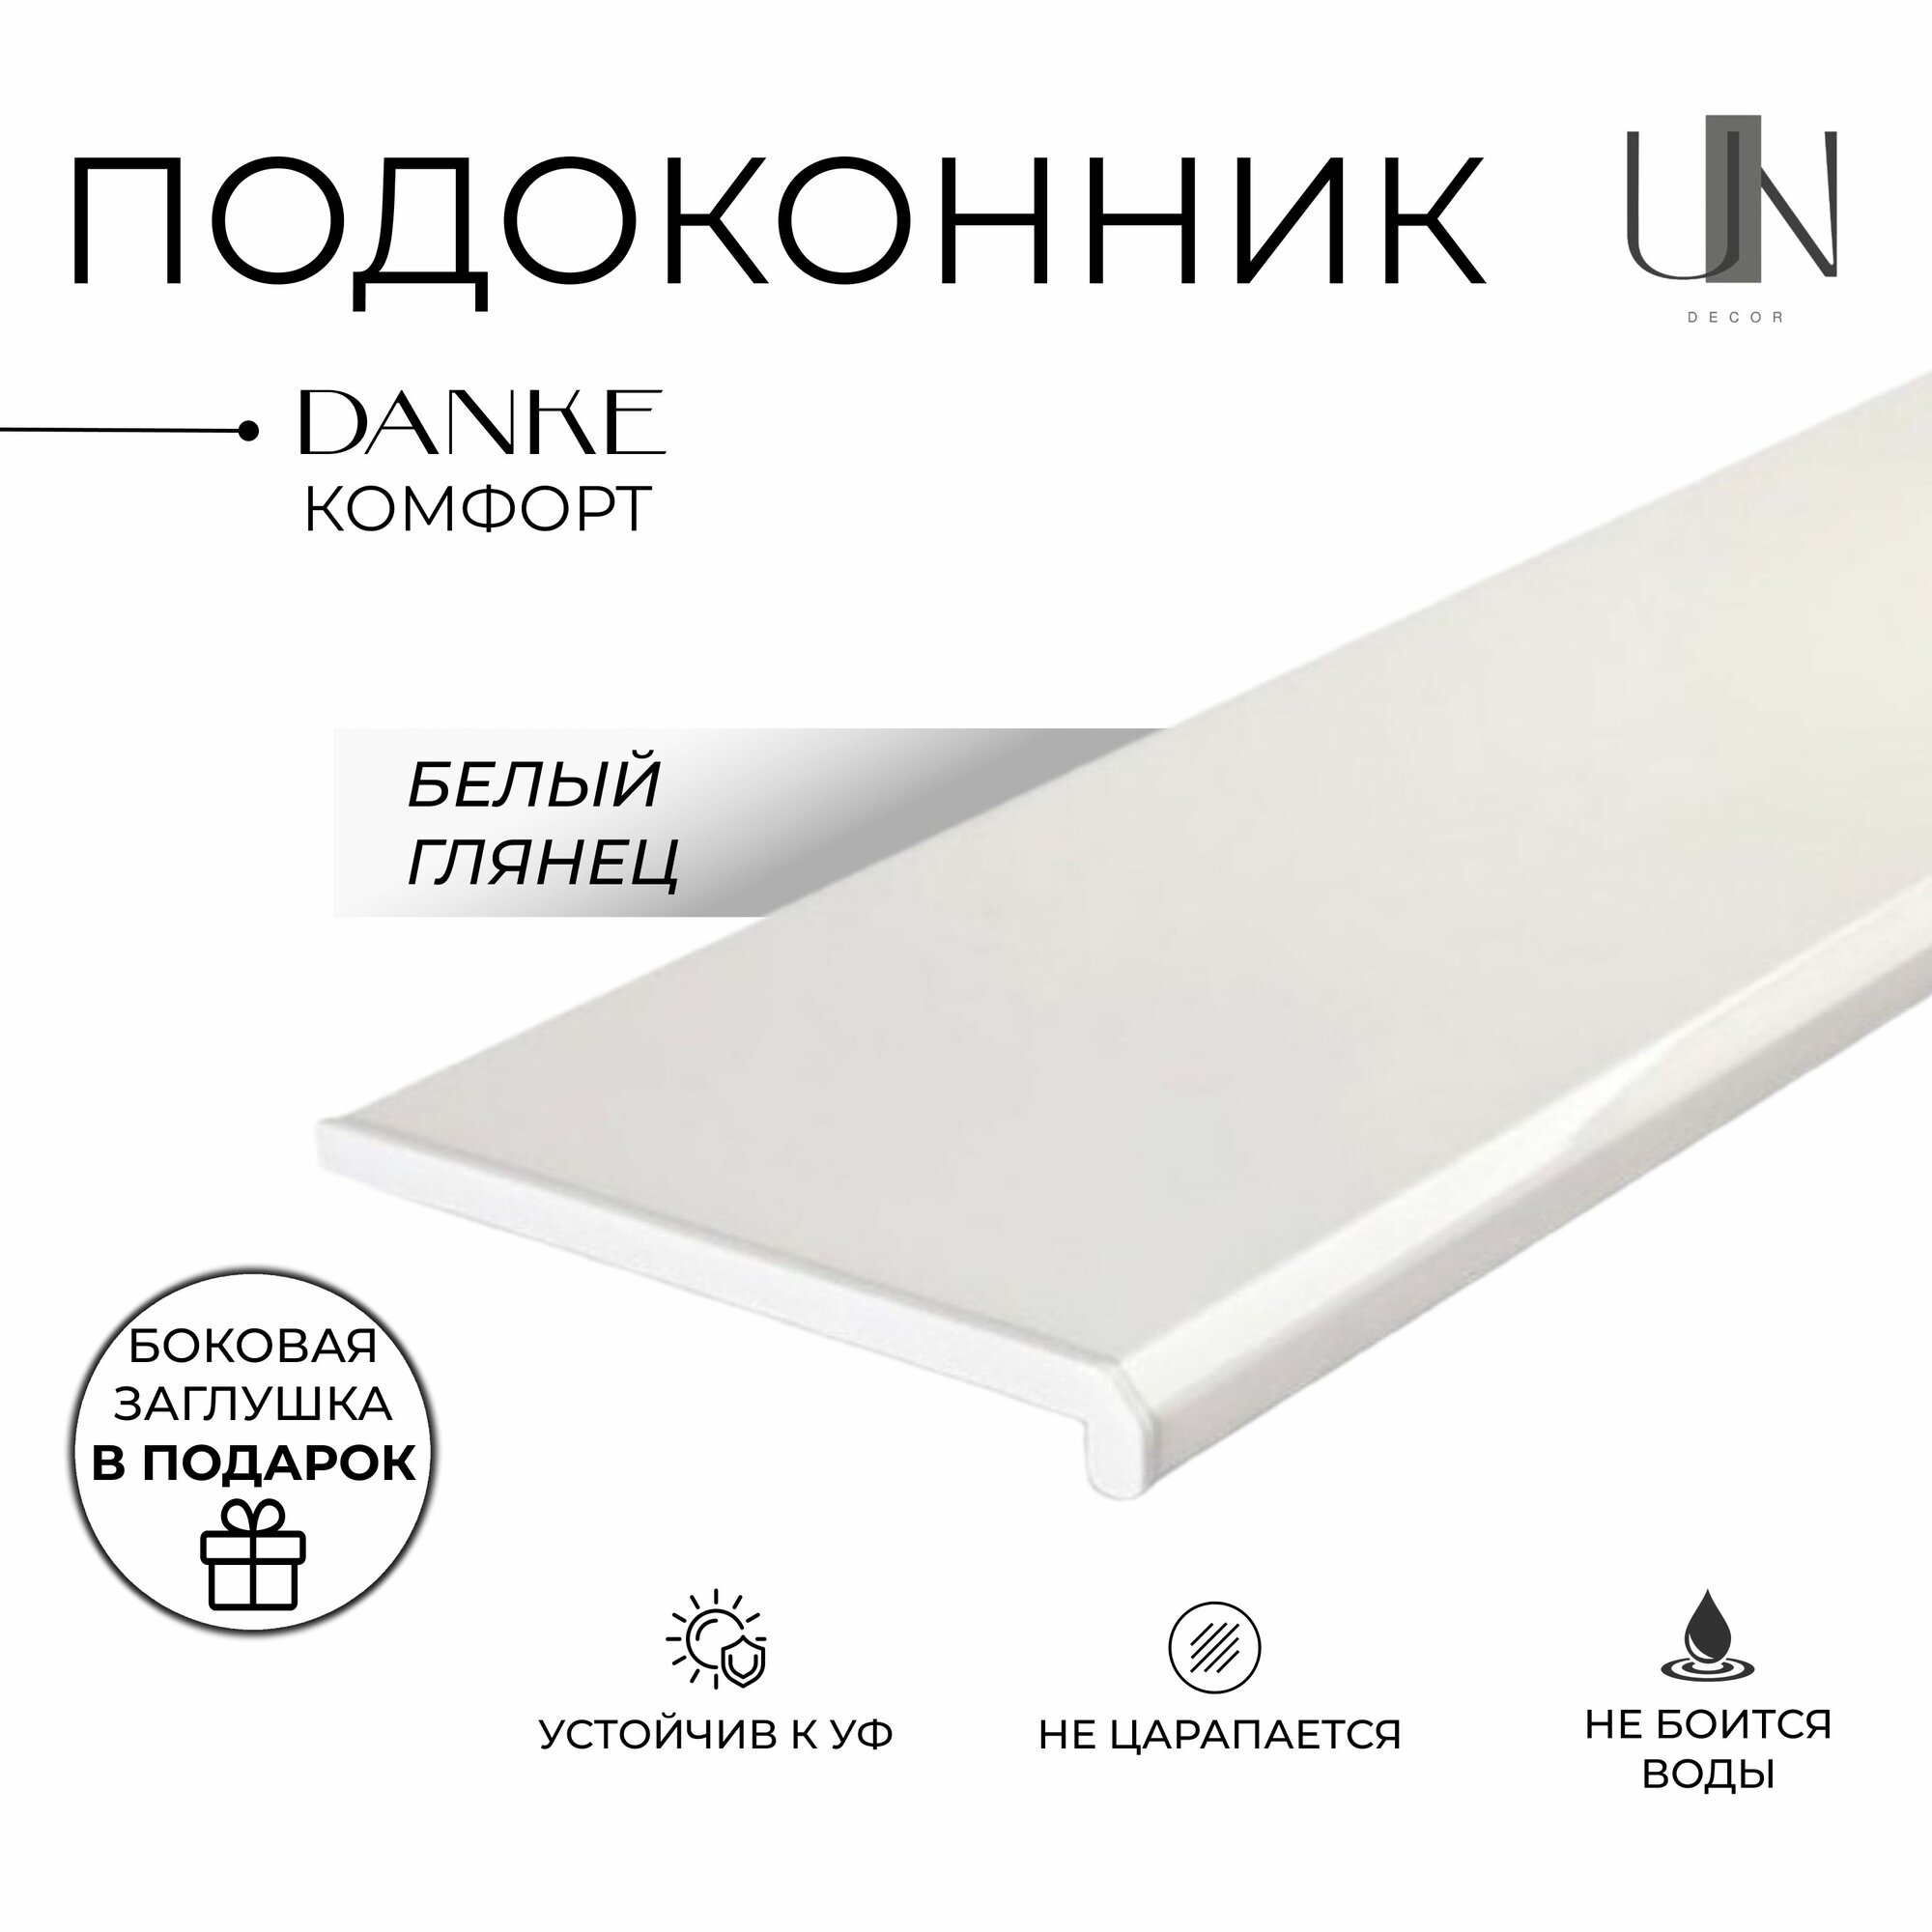 Подоконник Данке Белый глянцевый, коллекция DANKE KOMFORT 15 см х 0,7 м. пог.(150мм*700мм)